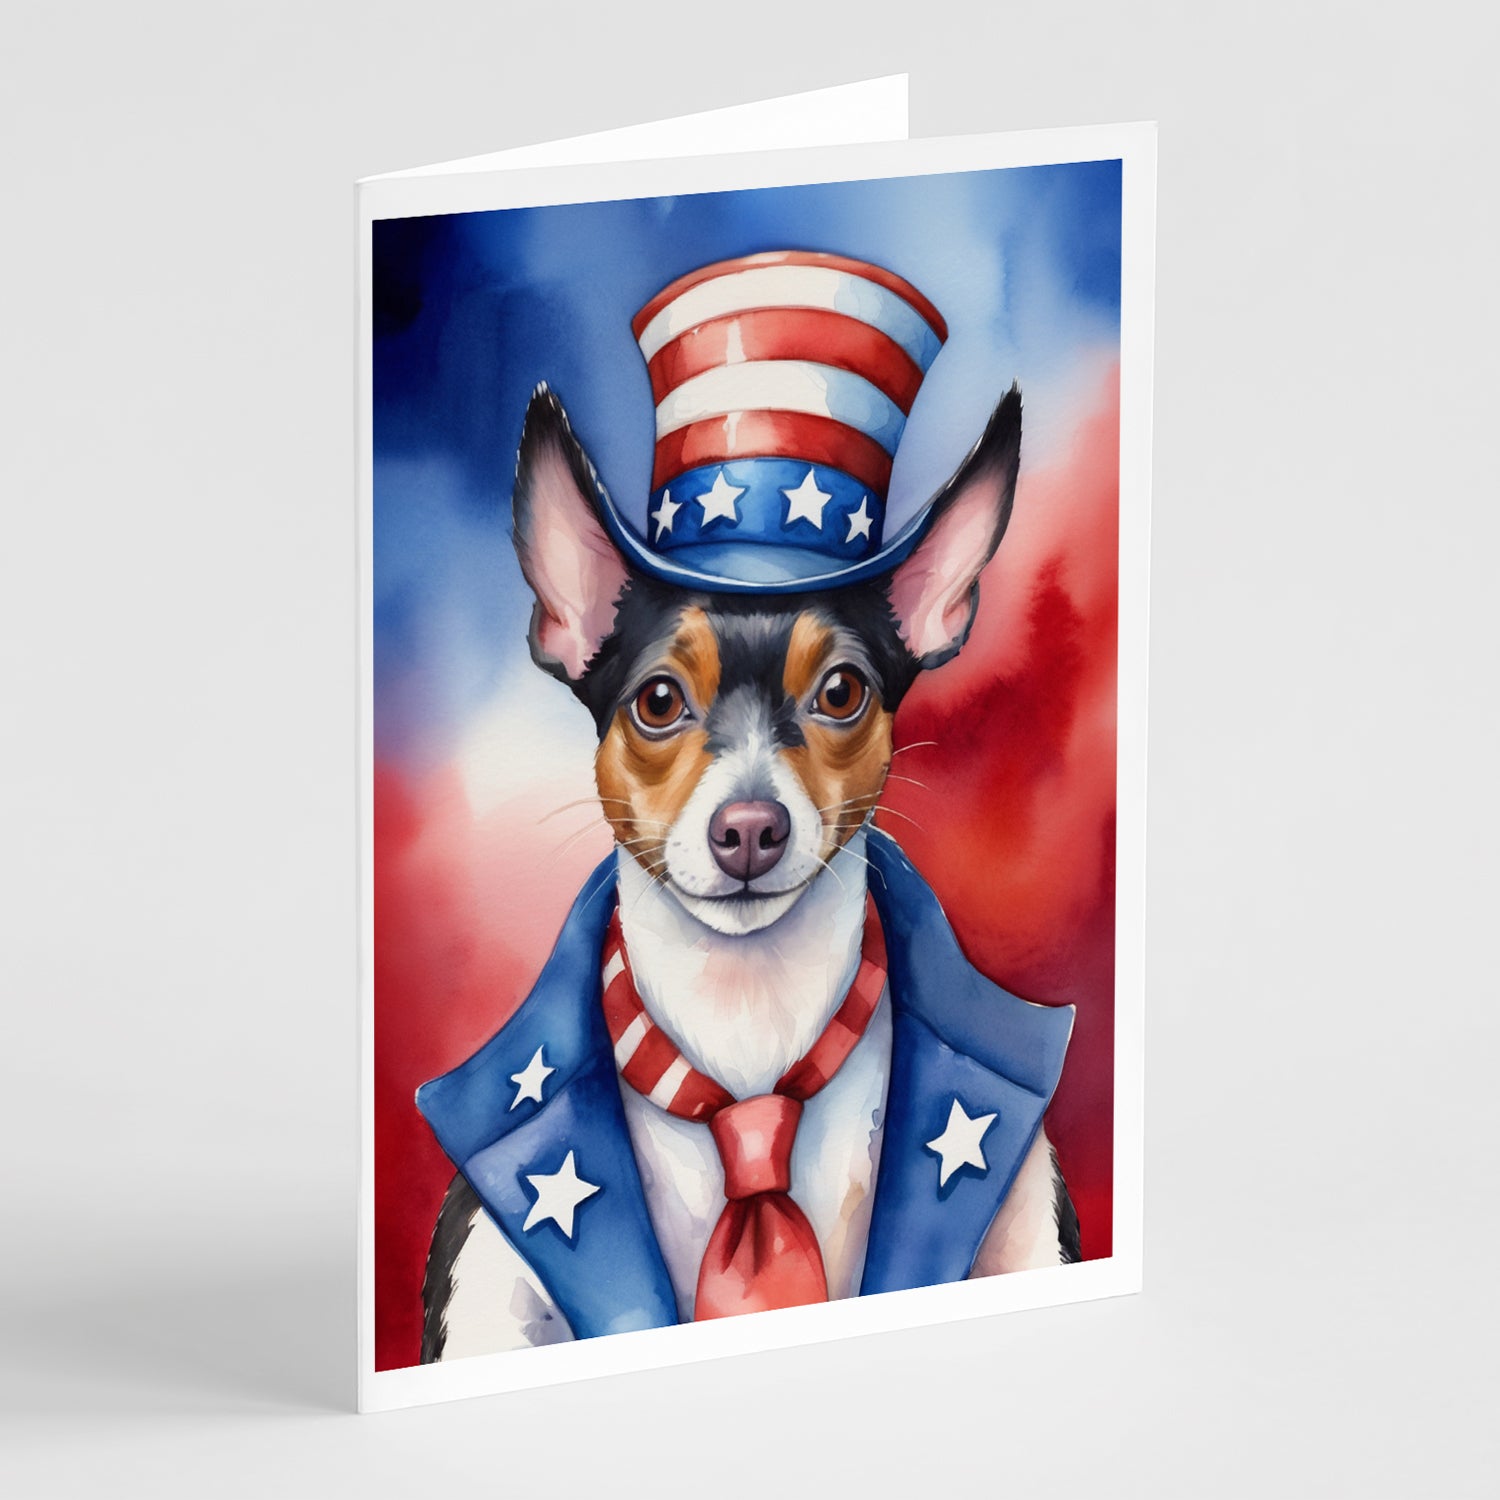 Buy this Rat Terrier Patriotic American Greeting Cards Pack of 8